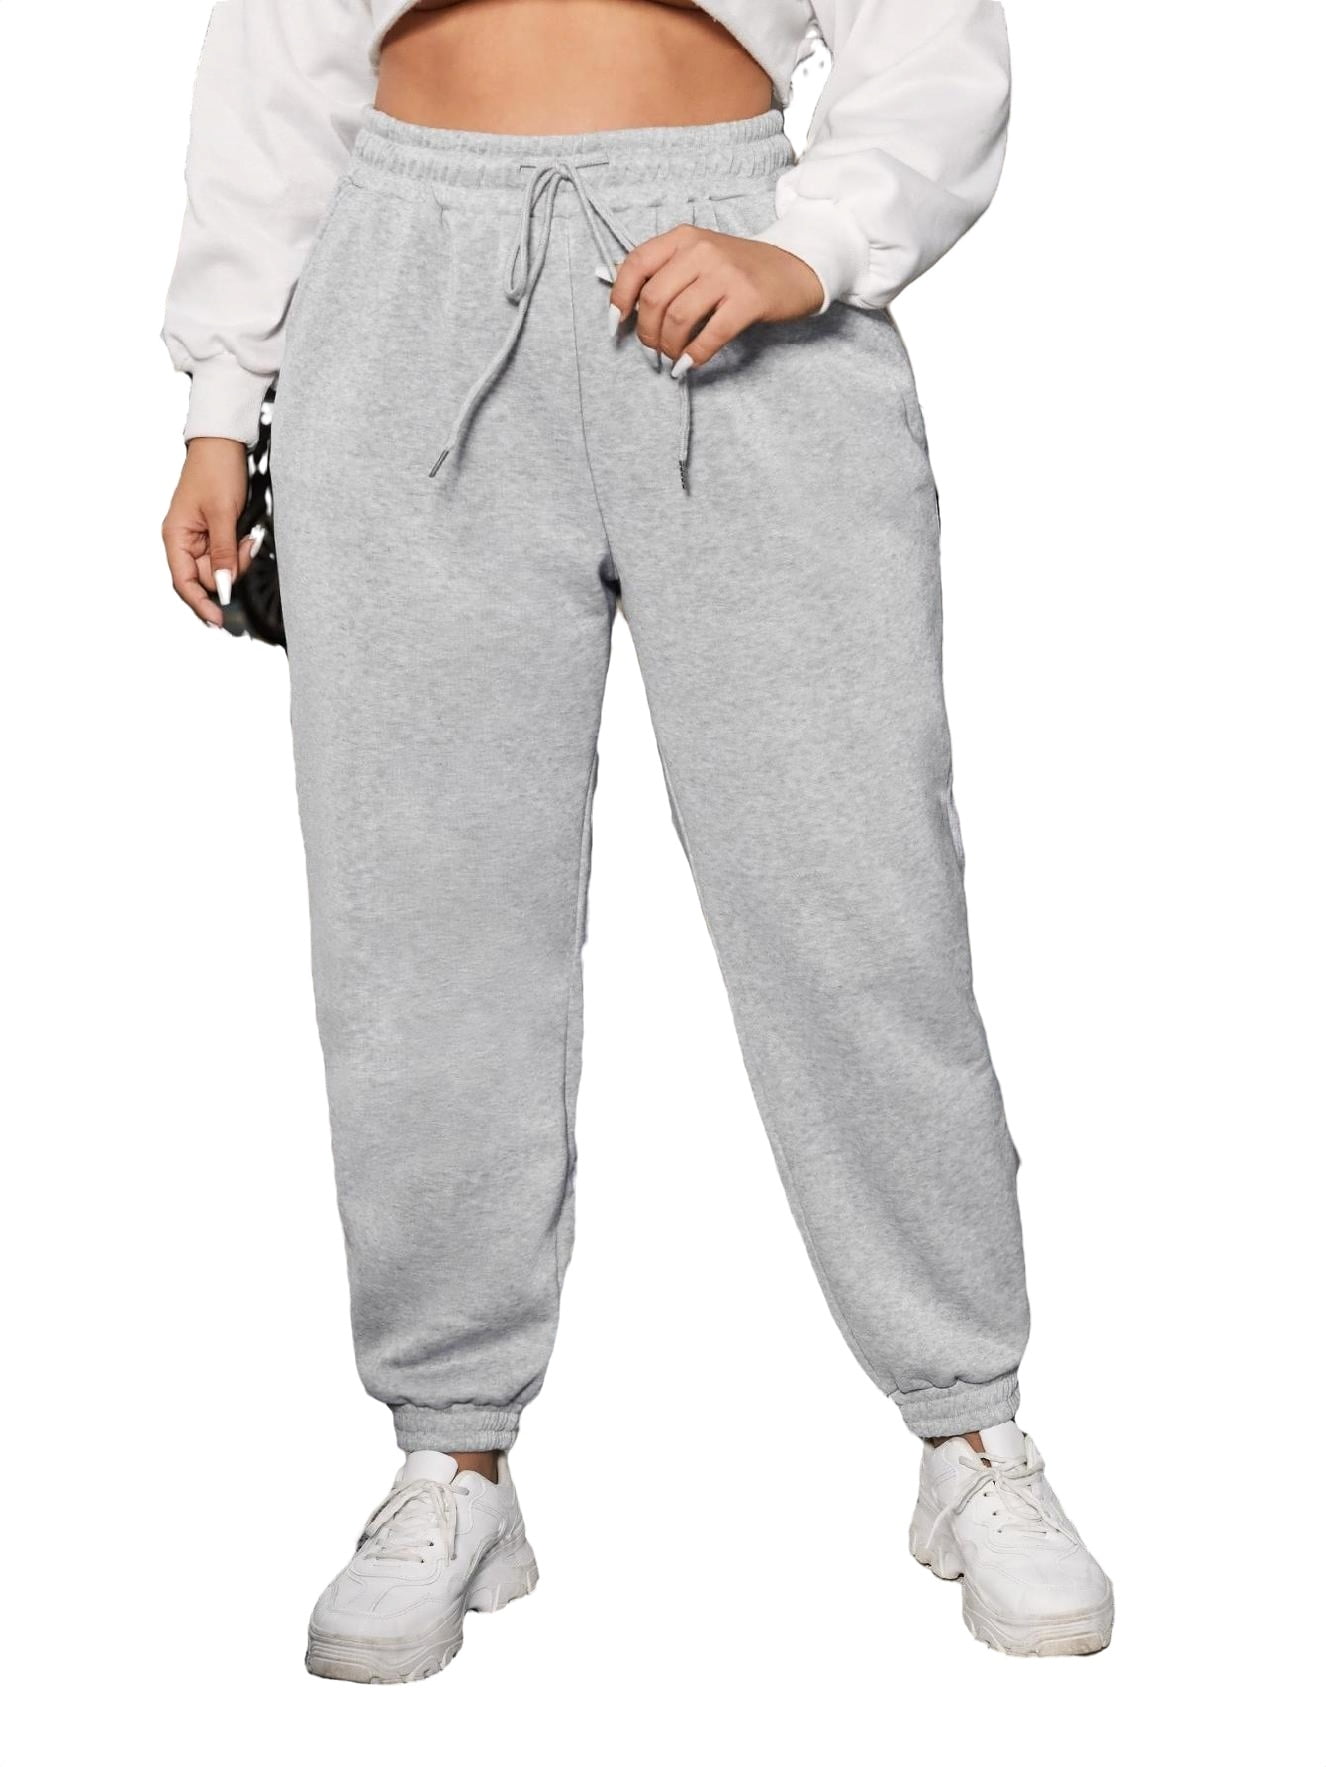 Solid Light Grey Plus Size Sweatpants (Women's) - Walmart.com